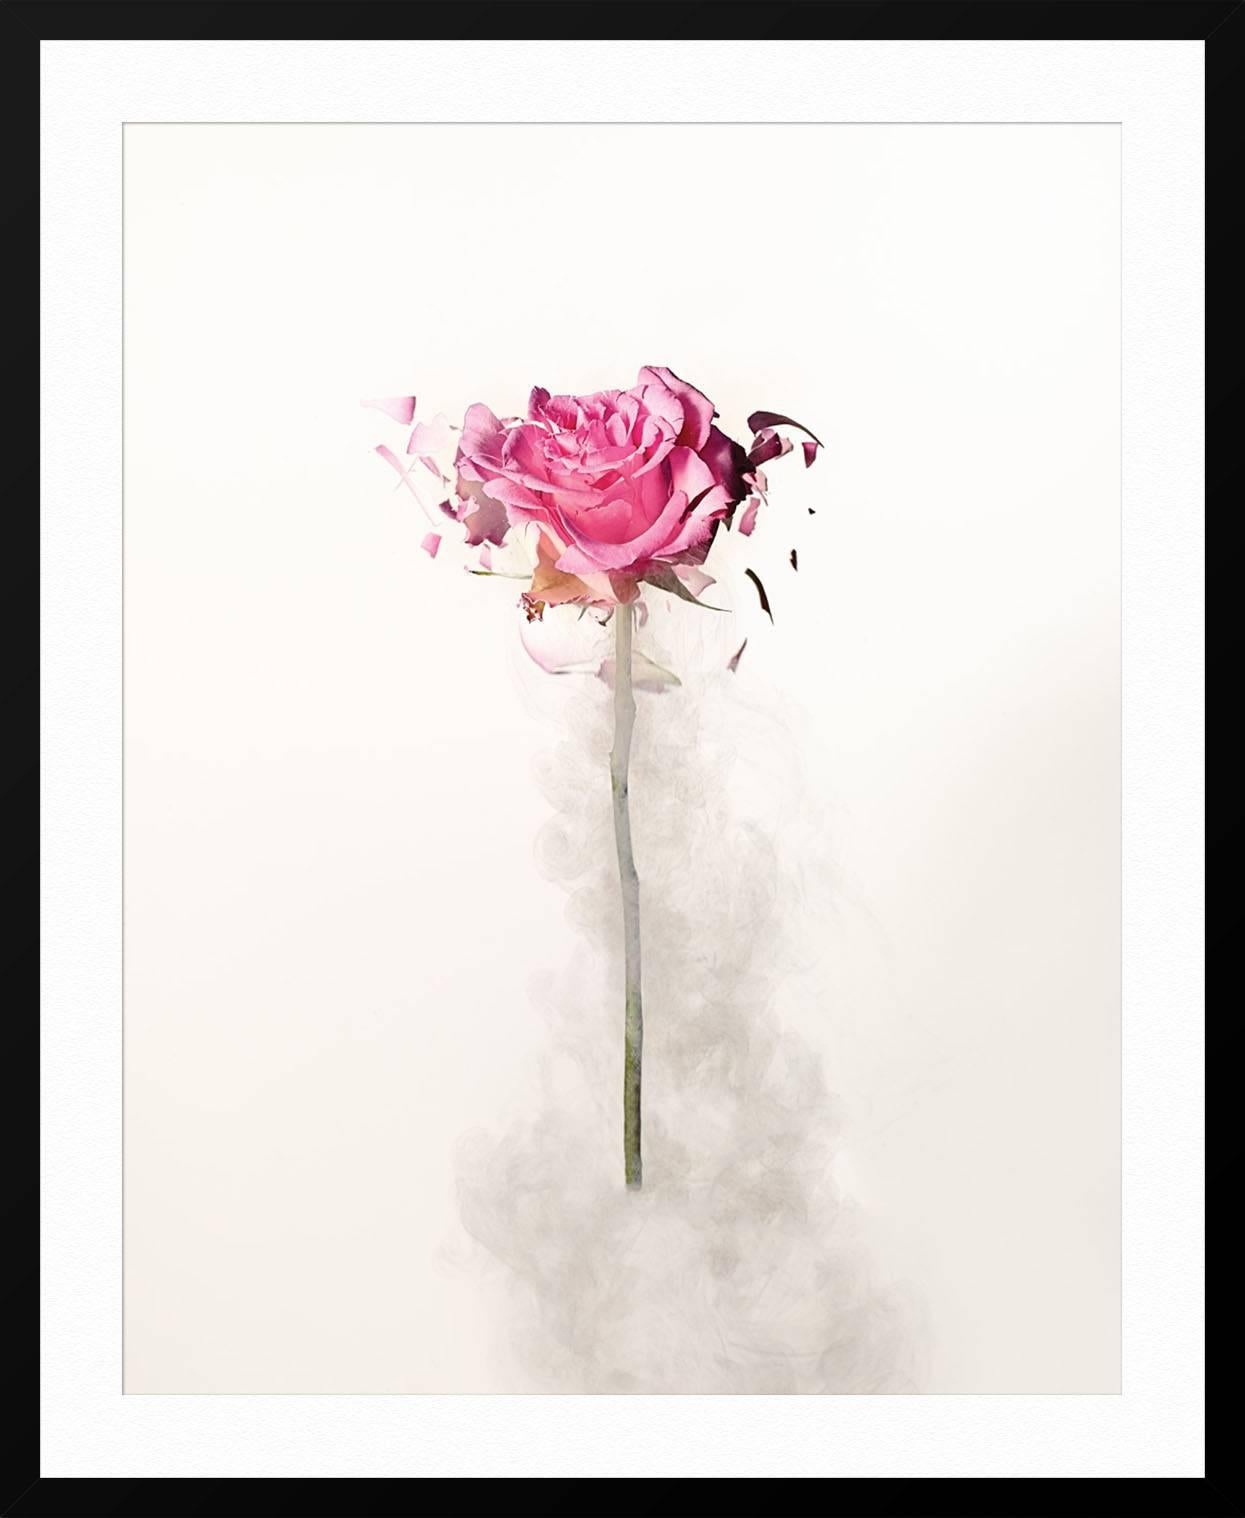 Rose Explosion 2 - Gray Still-Life Photograph by Dan Saelinger